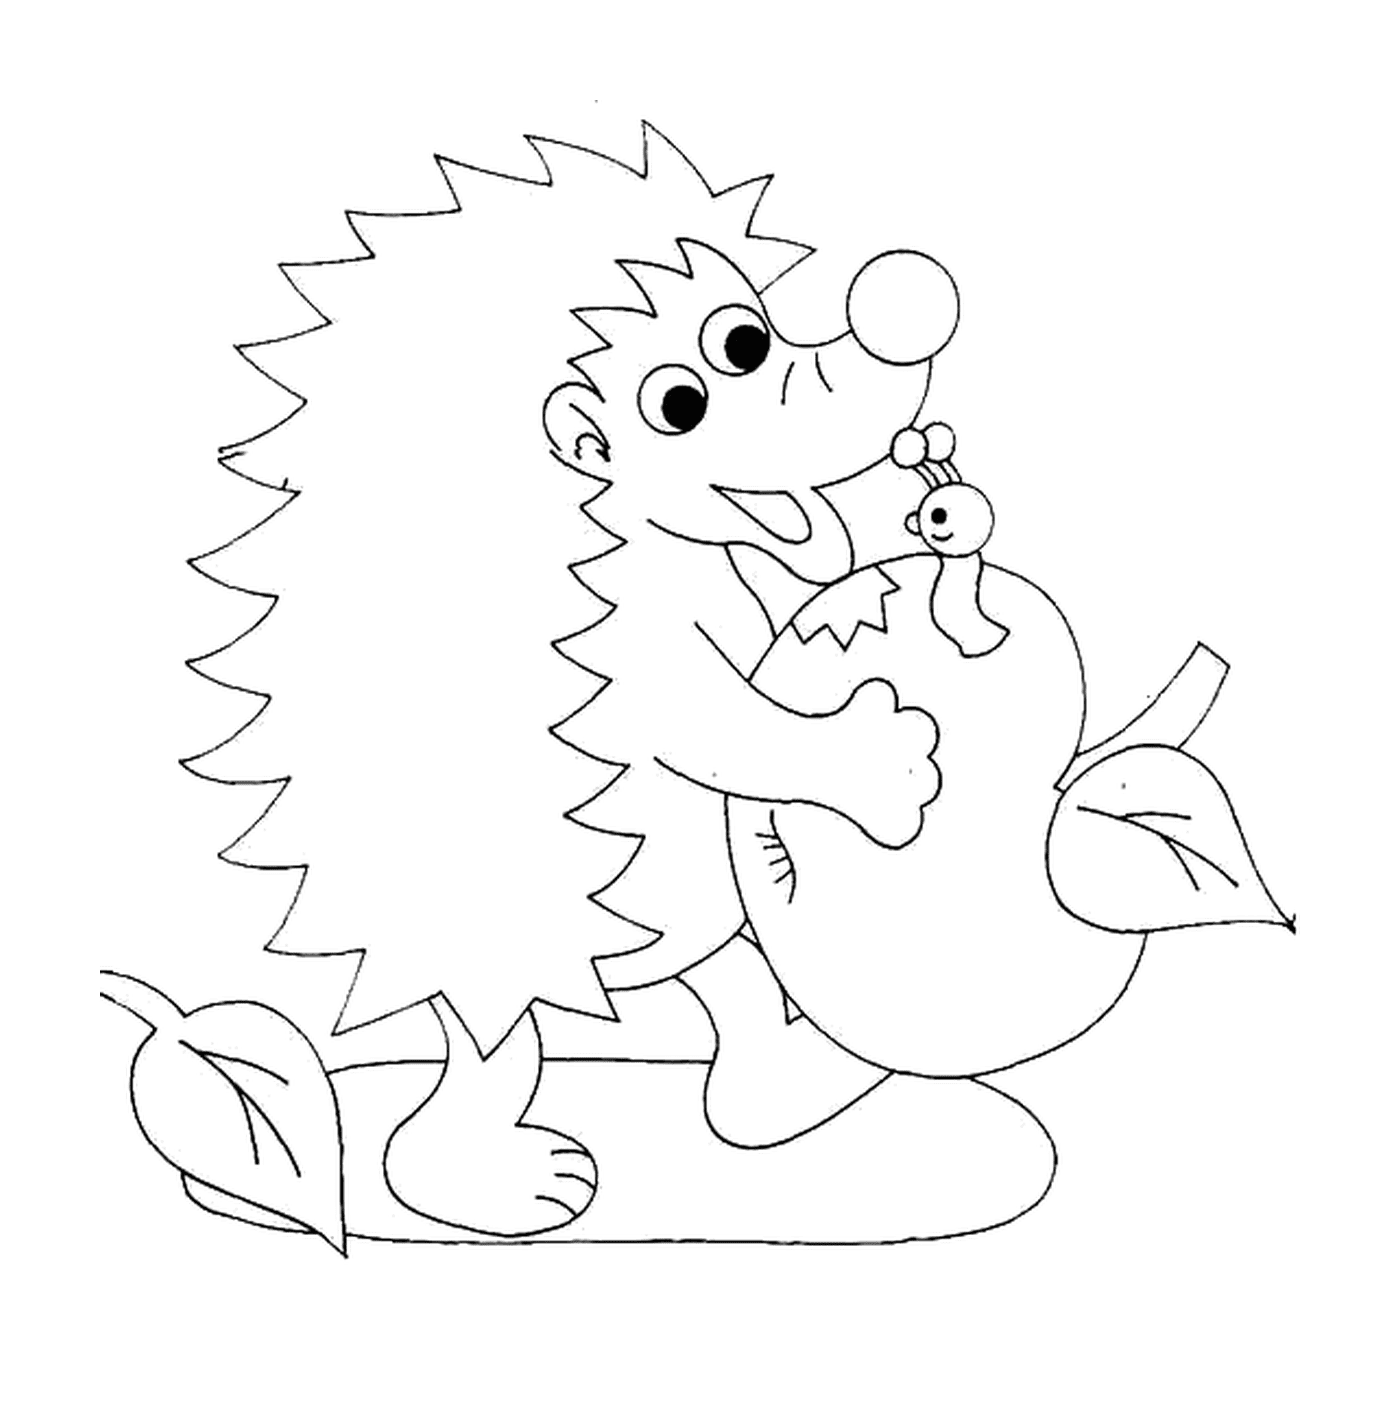  Hedgehog carrying an apple 